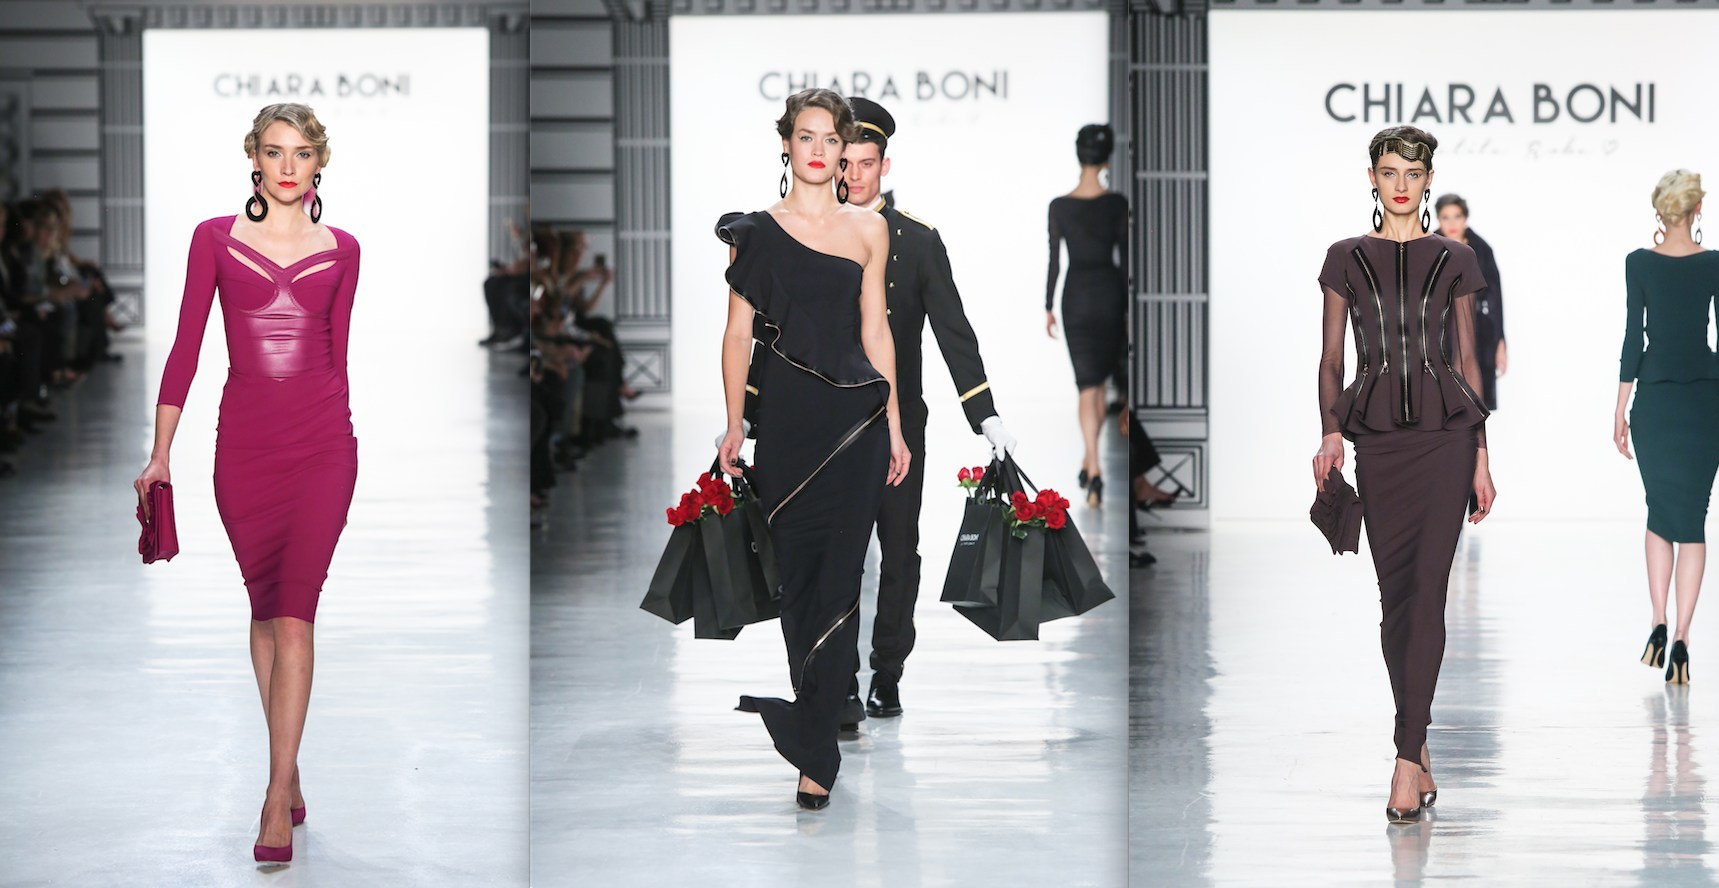 CHIARA BONI La Petite Robe Presents New Collection at New York Fashion Week